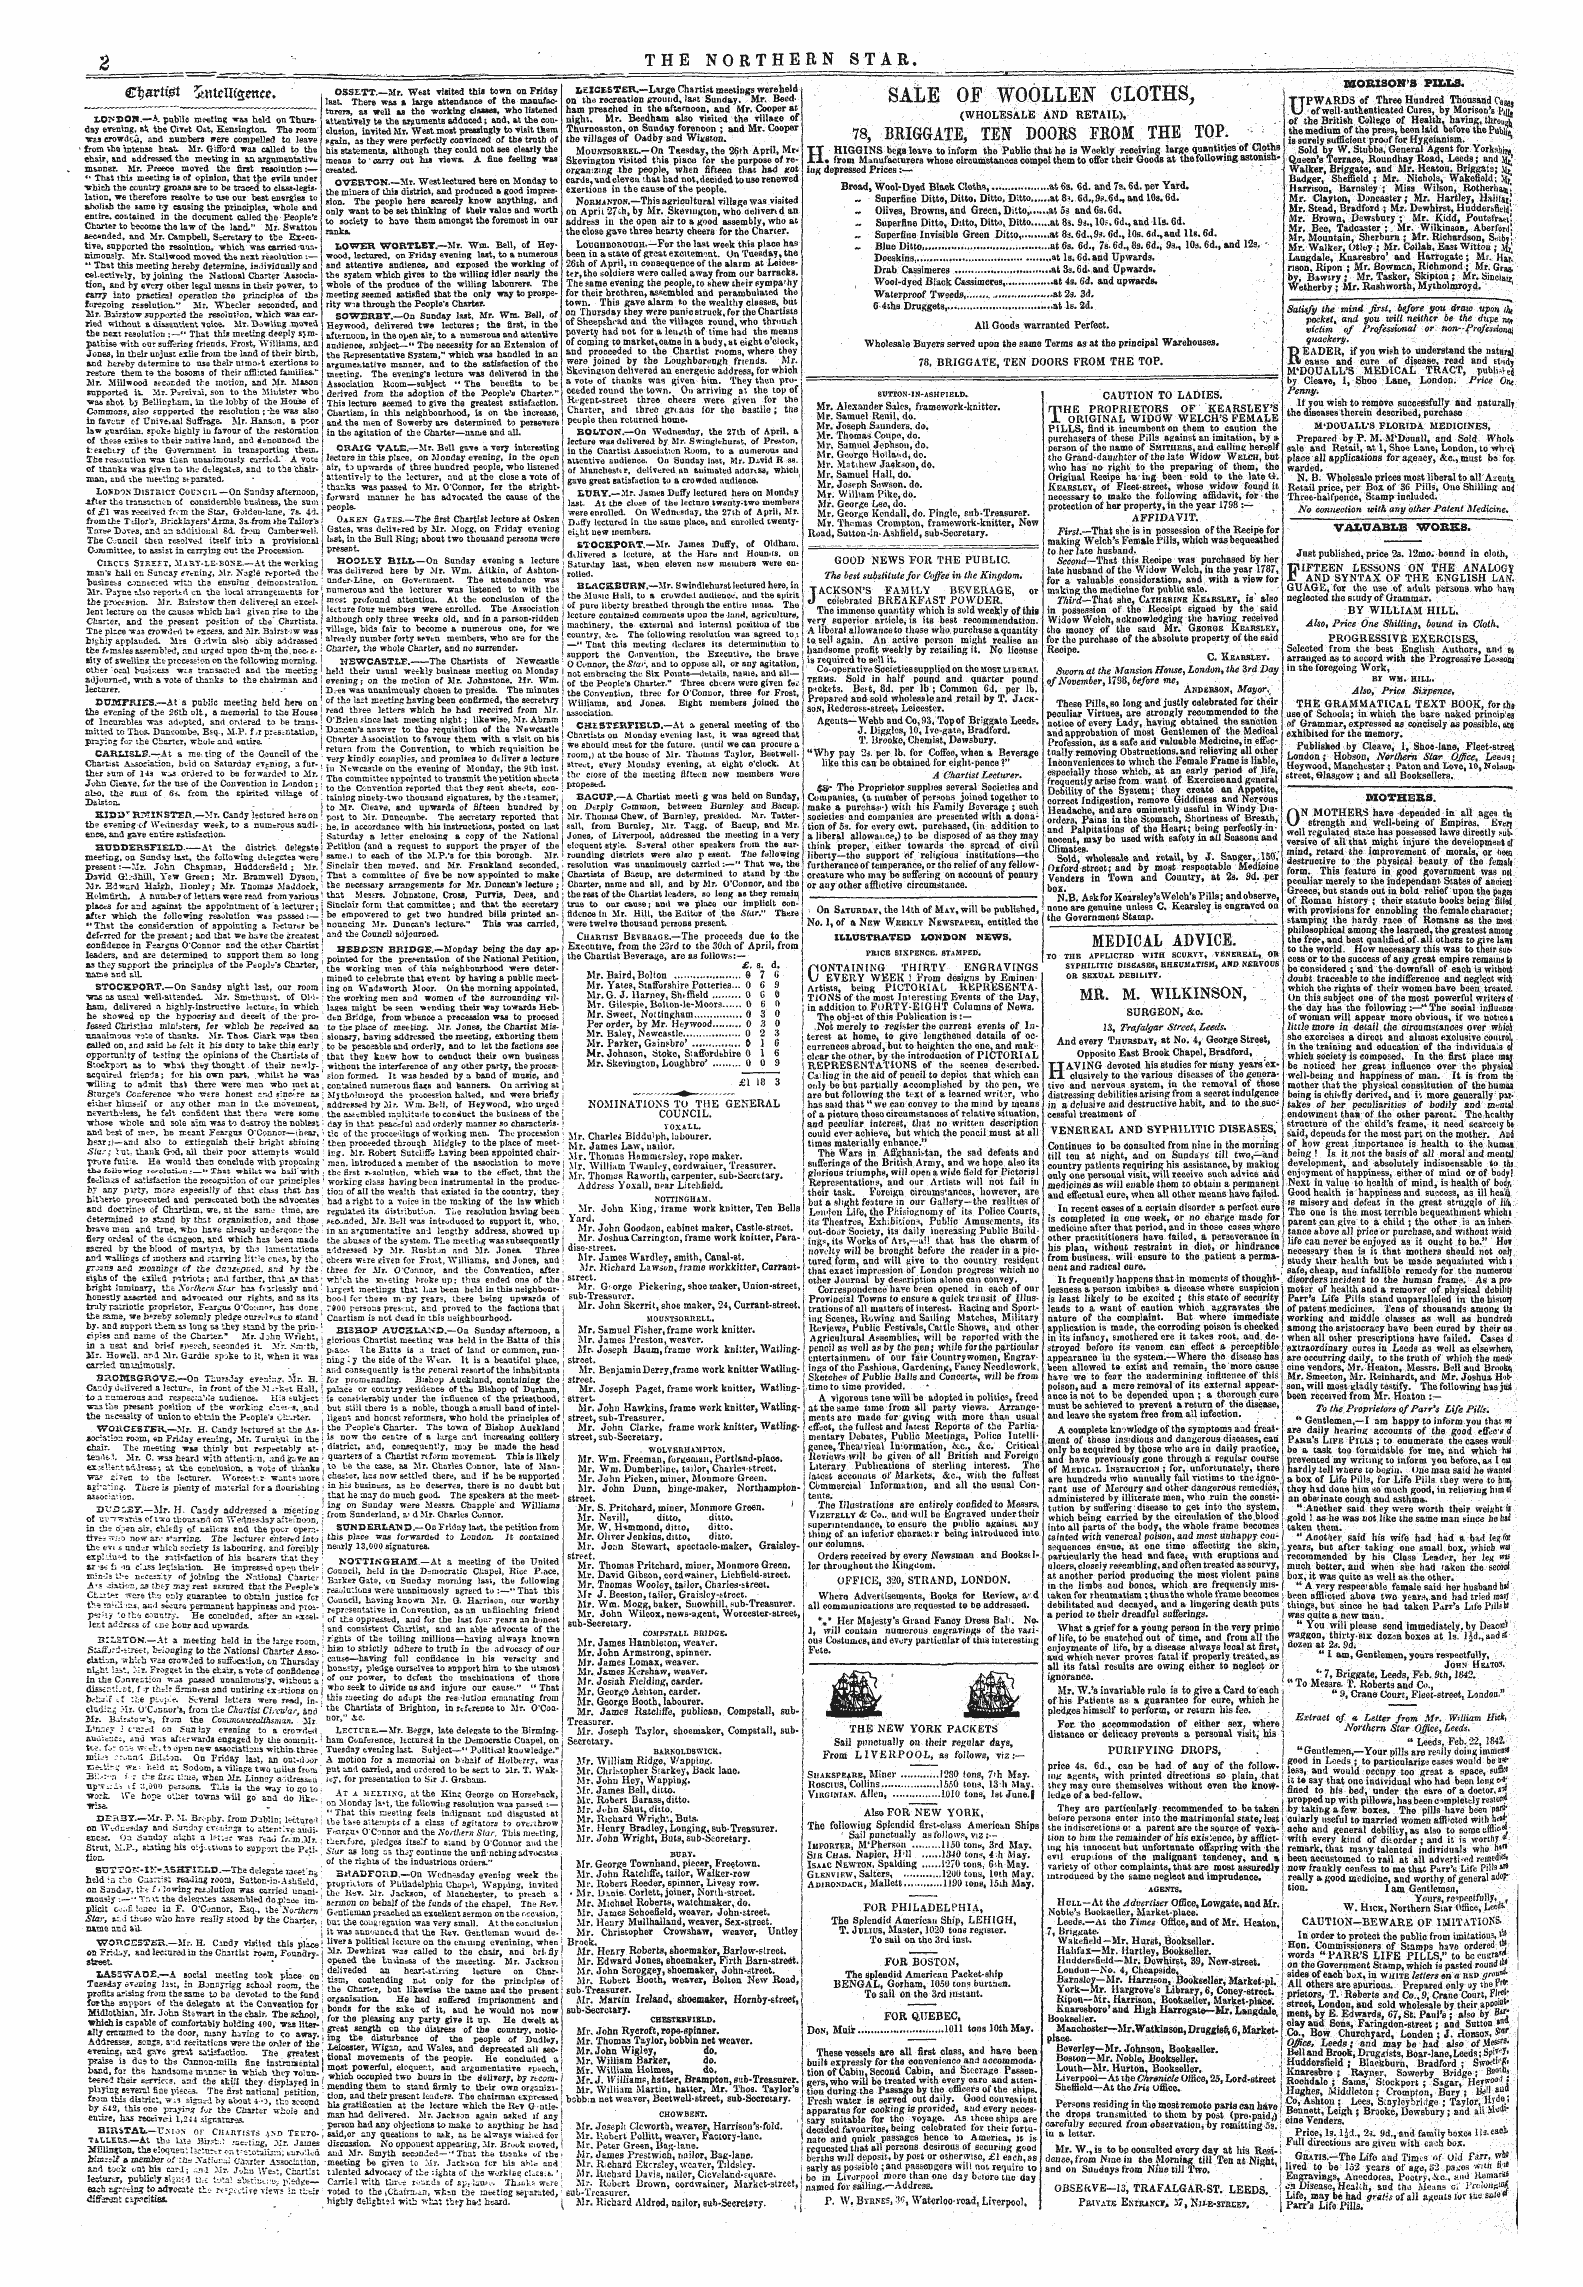 Northern Star (1837-1852): jS F Y, 5th edition - Untitled Ad